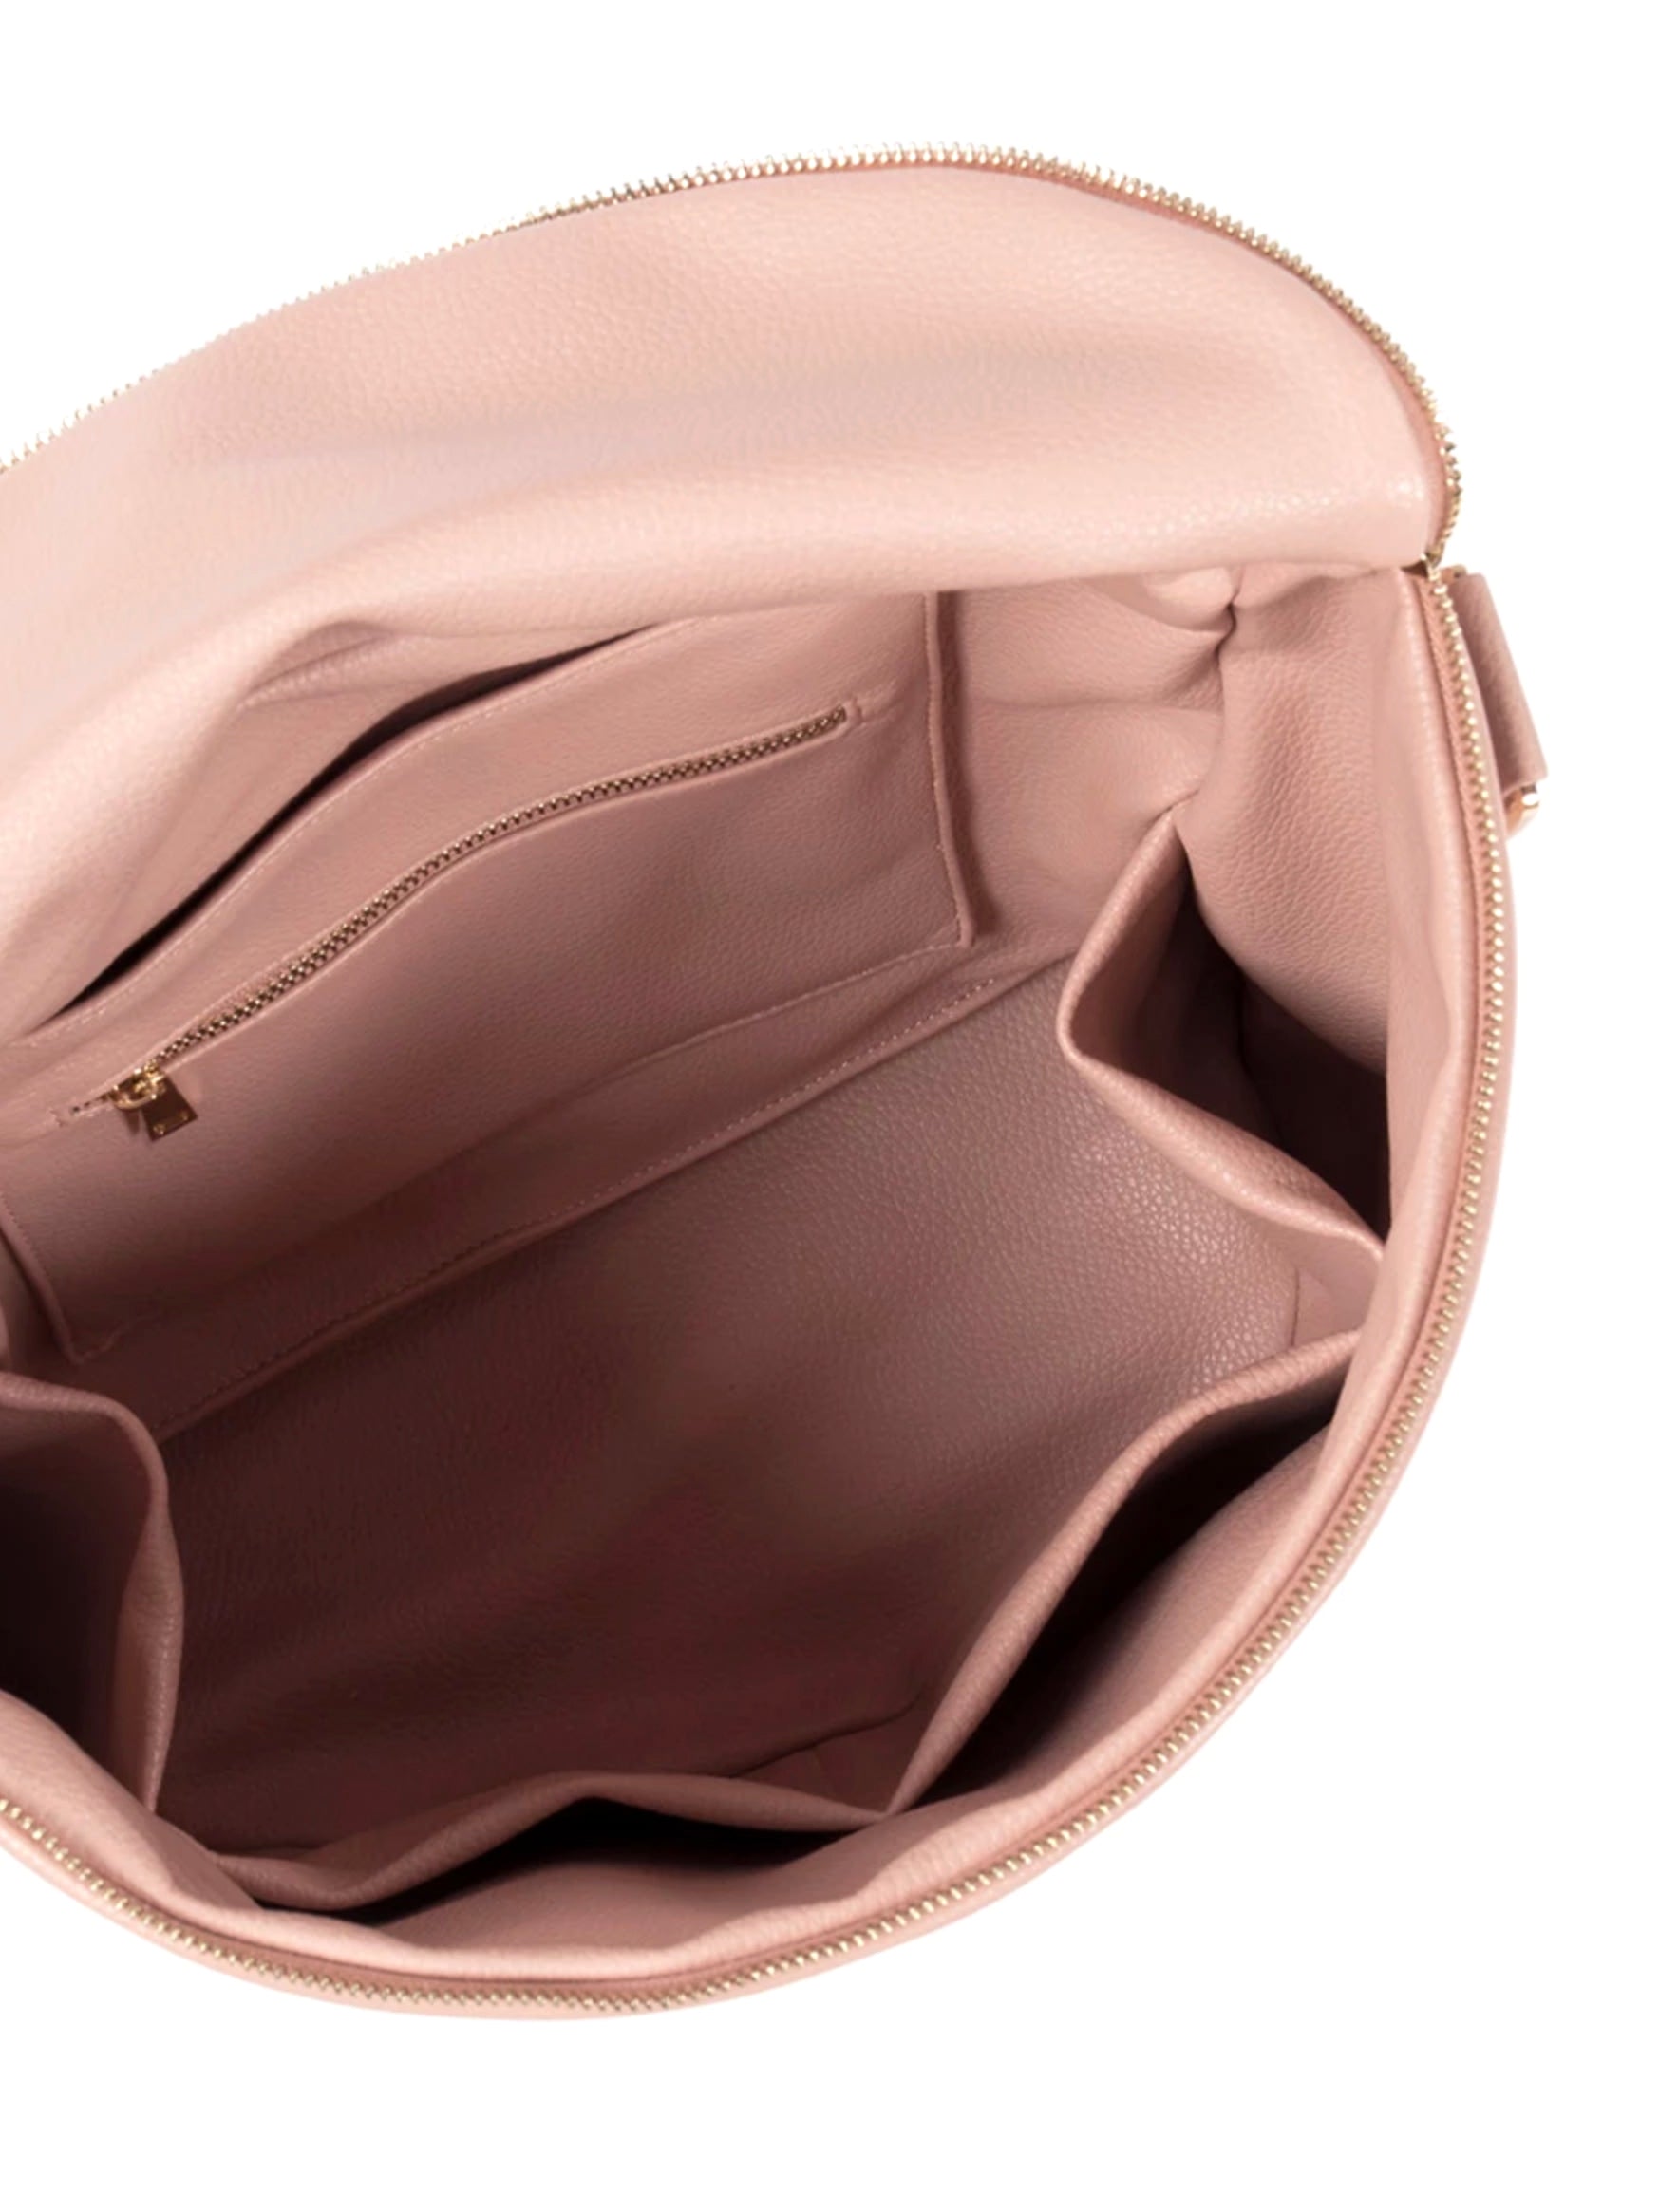 Fawn Design Diaper Bag in Cognac